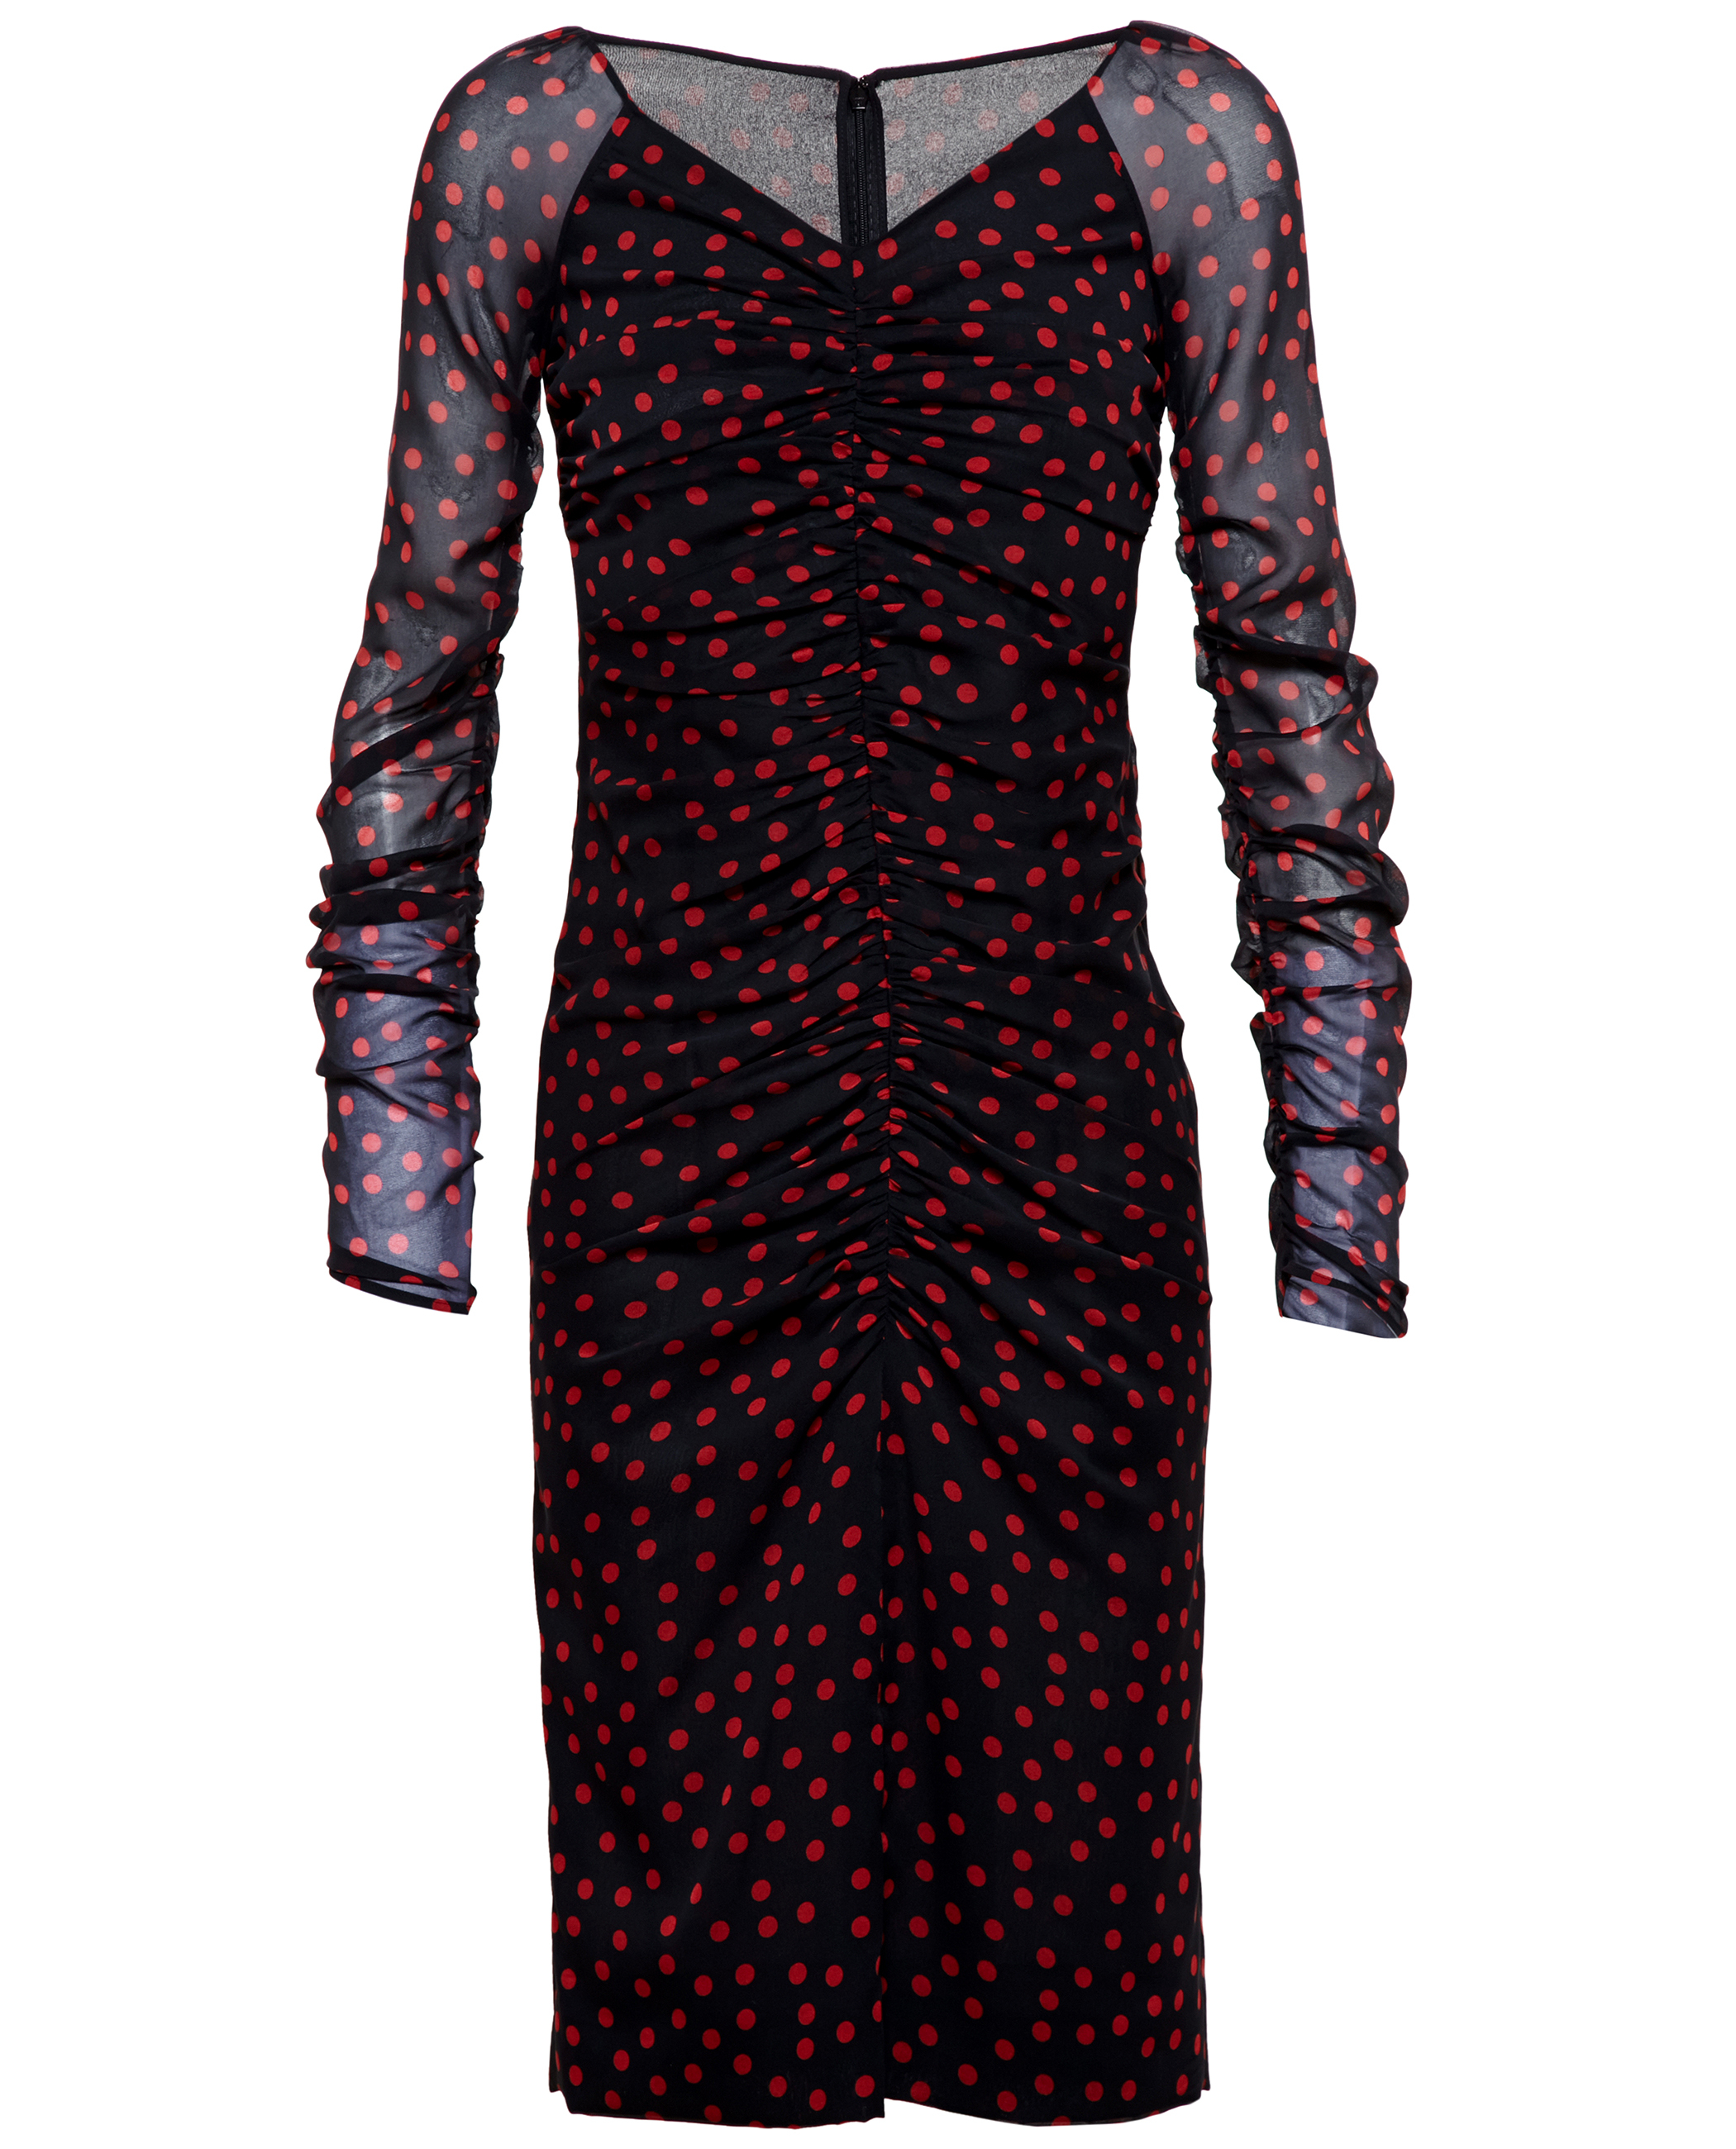 Dolce & Gabbana Ruched Silk Polka Dot Dress in Black Red (Black) - Lyst